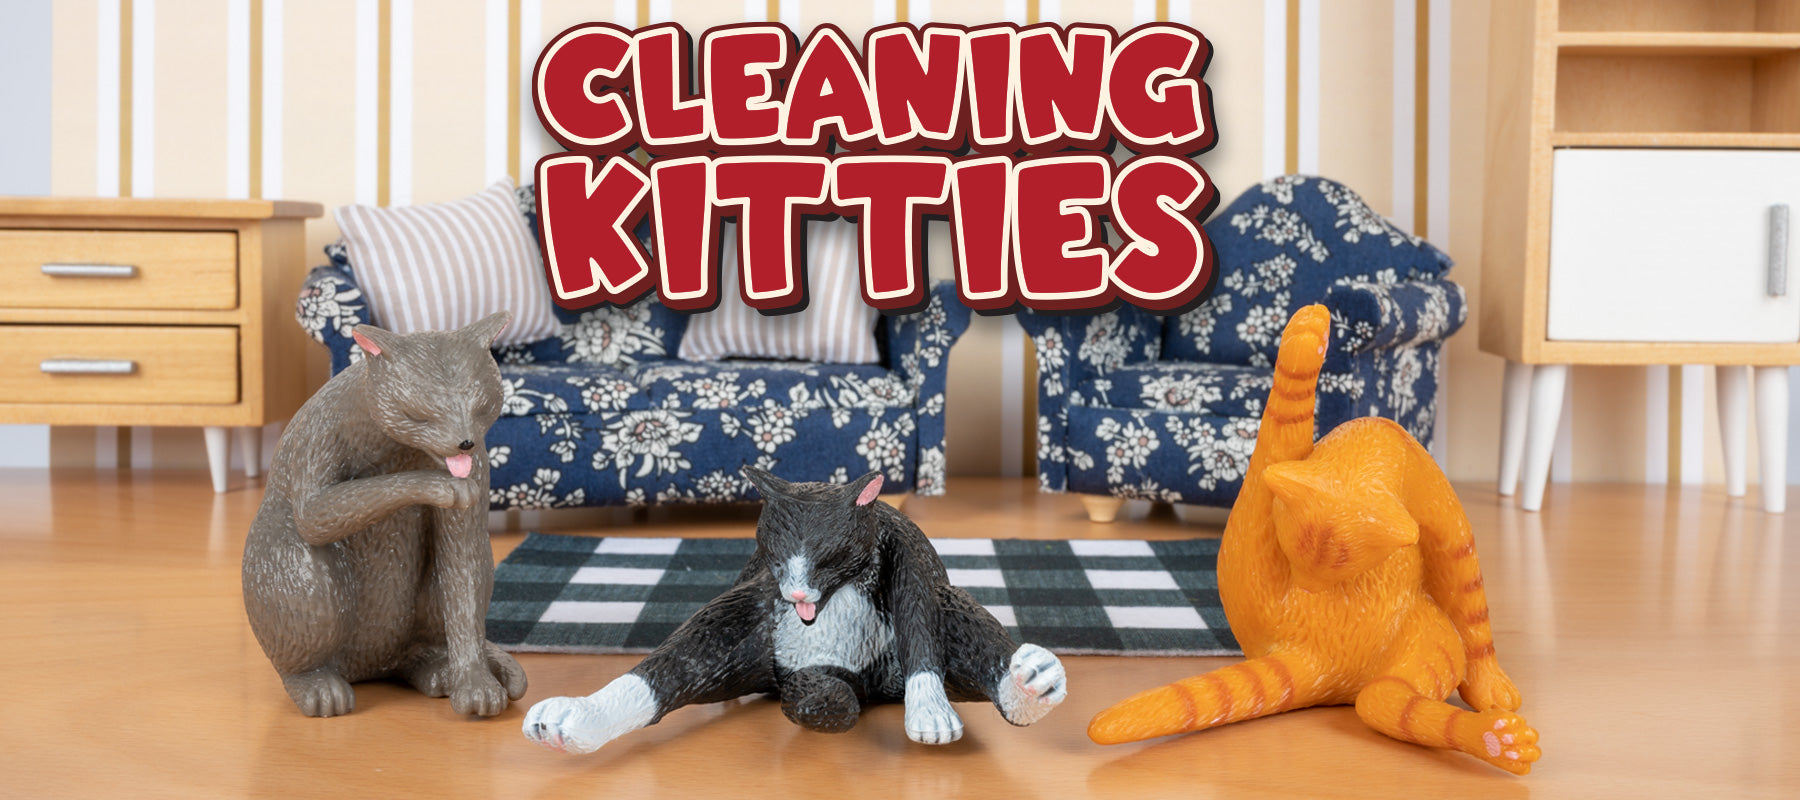 Three Cleaning Kitties